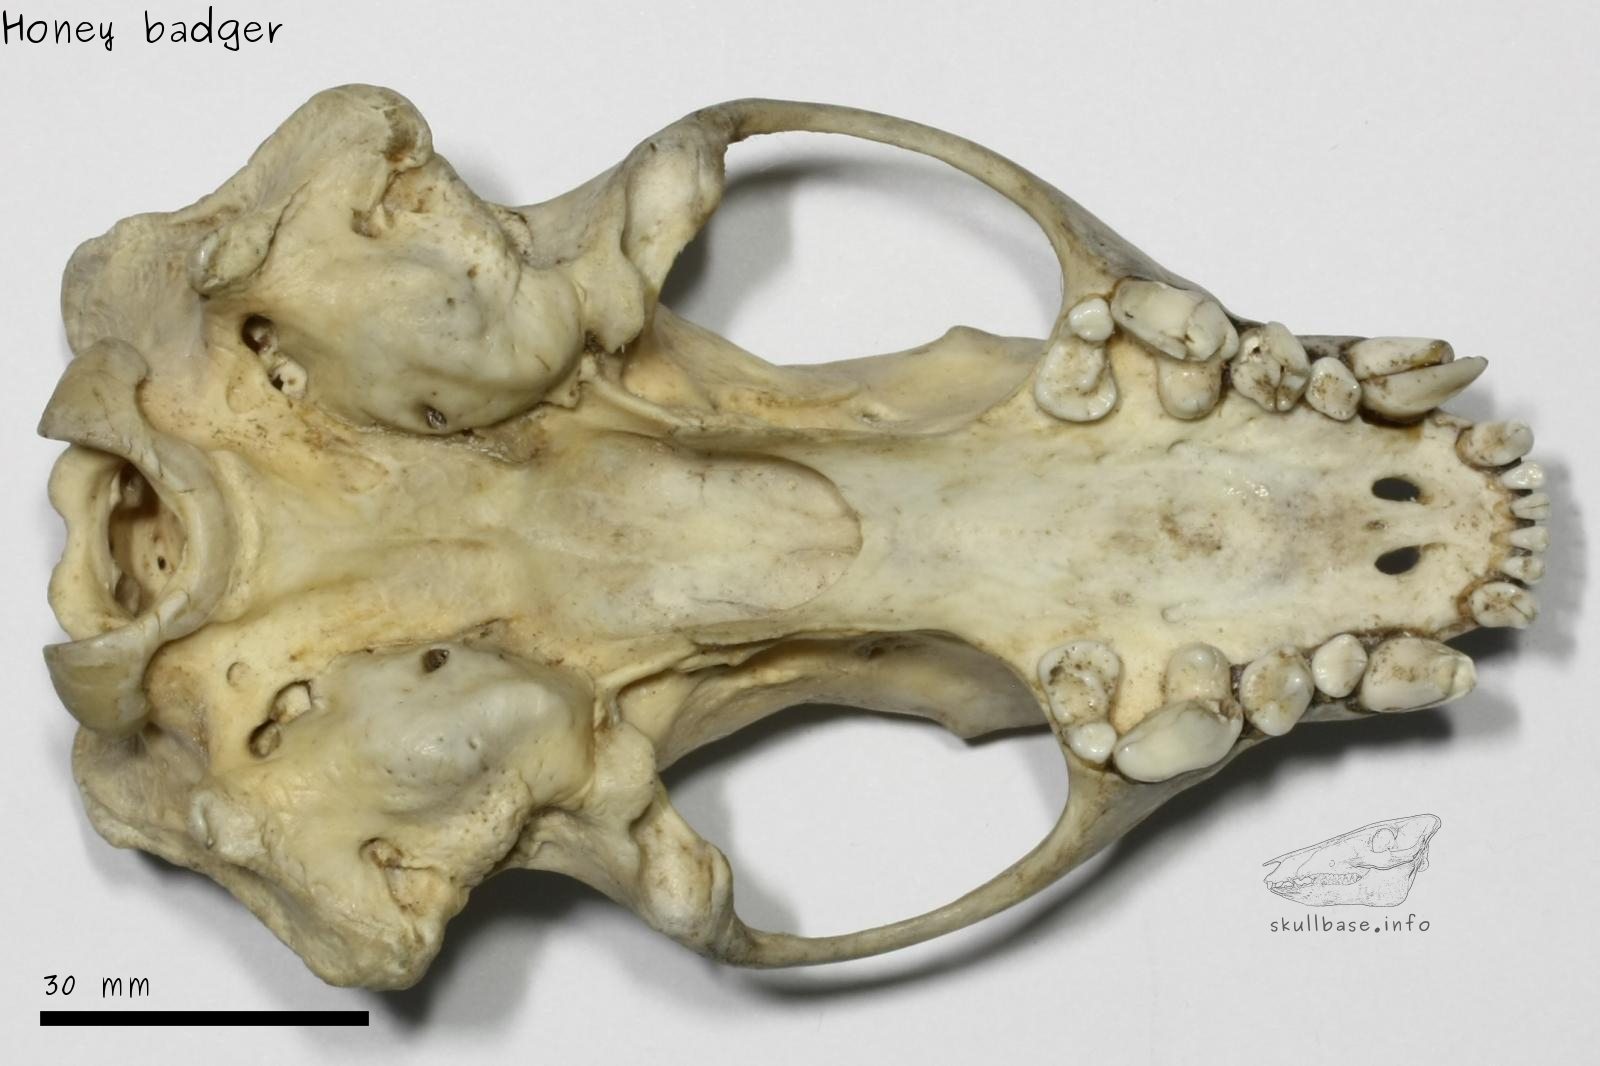 Honey badger (Mellivora capensis) skull ventral view